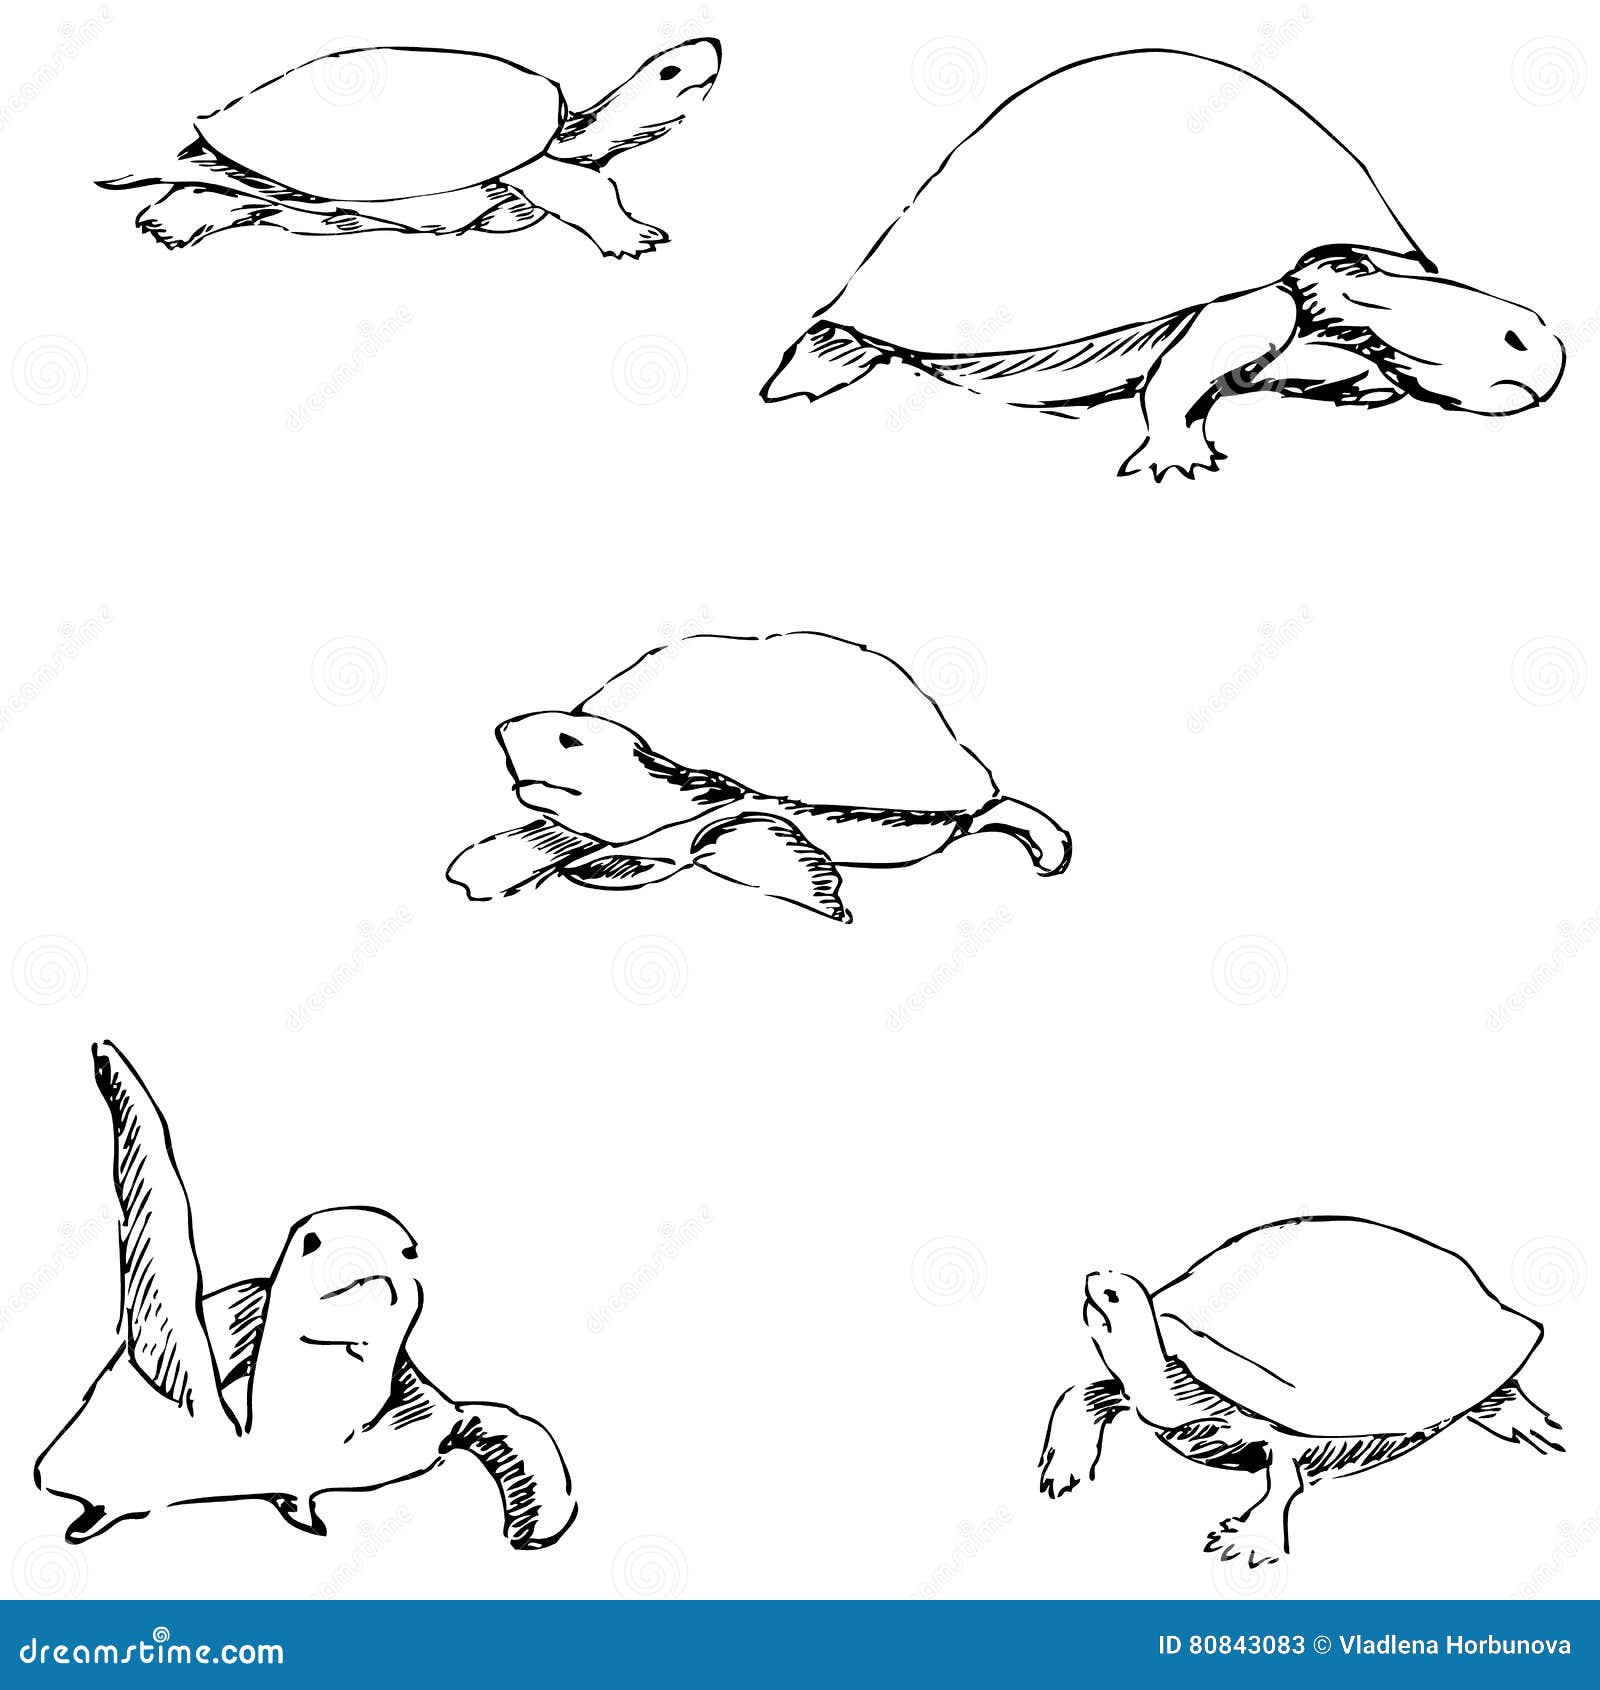 How to Draw a Sea Turtle - shop.nil-tech